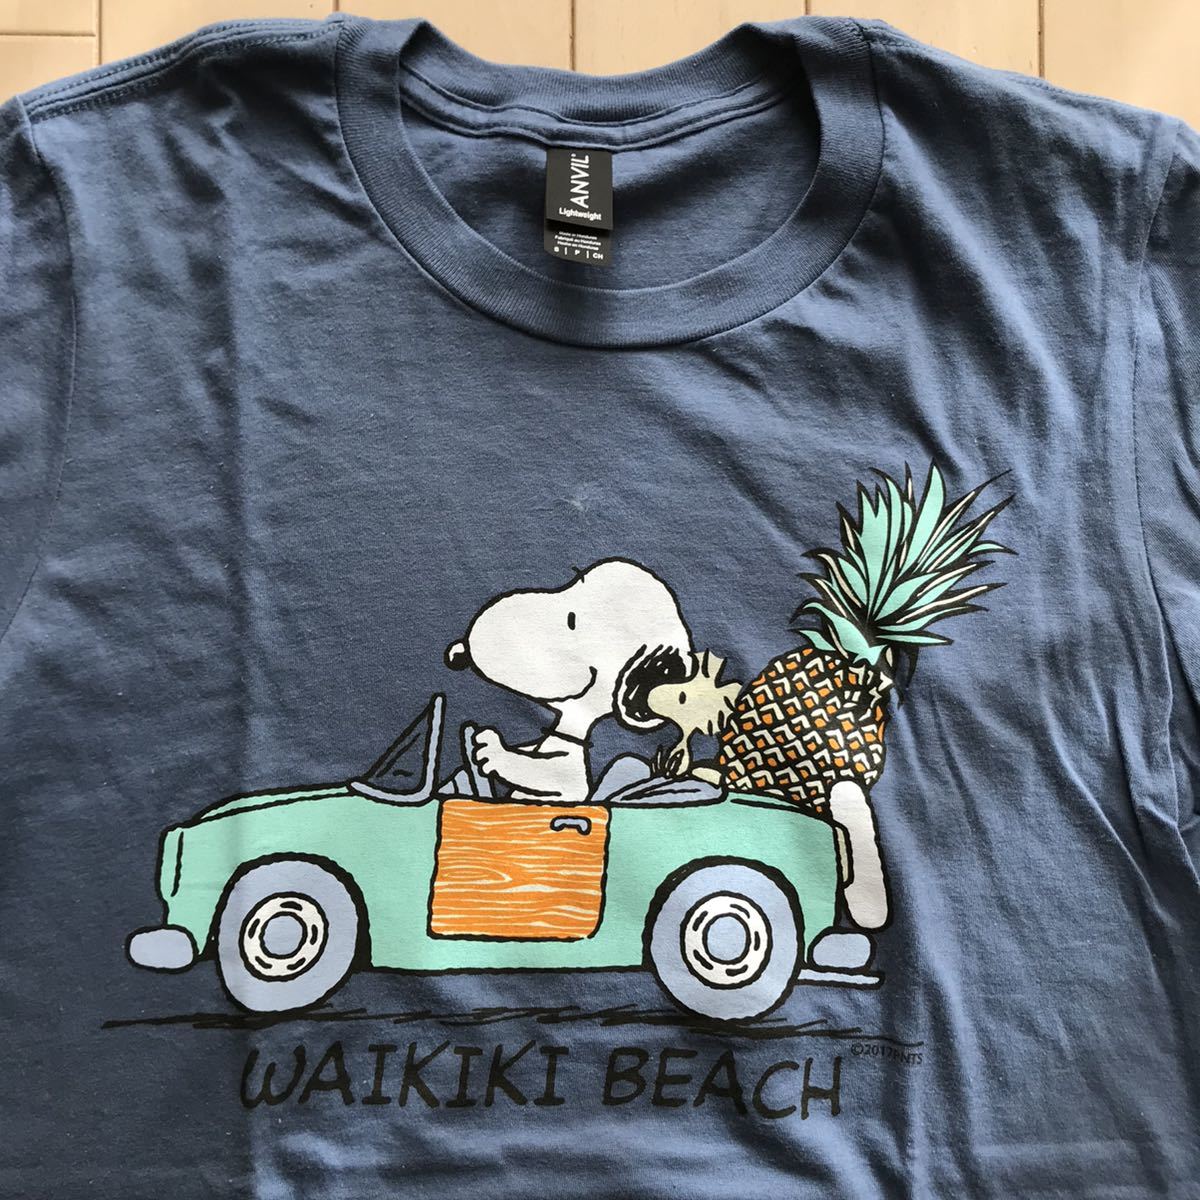  Snoopy Waikiki beach Hawaii limitation T-shirt new goods unused S size 